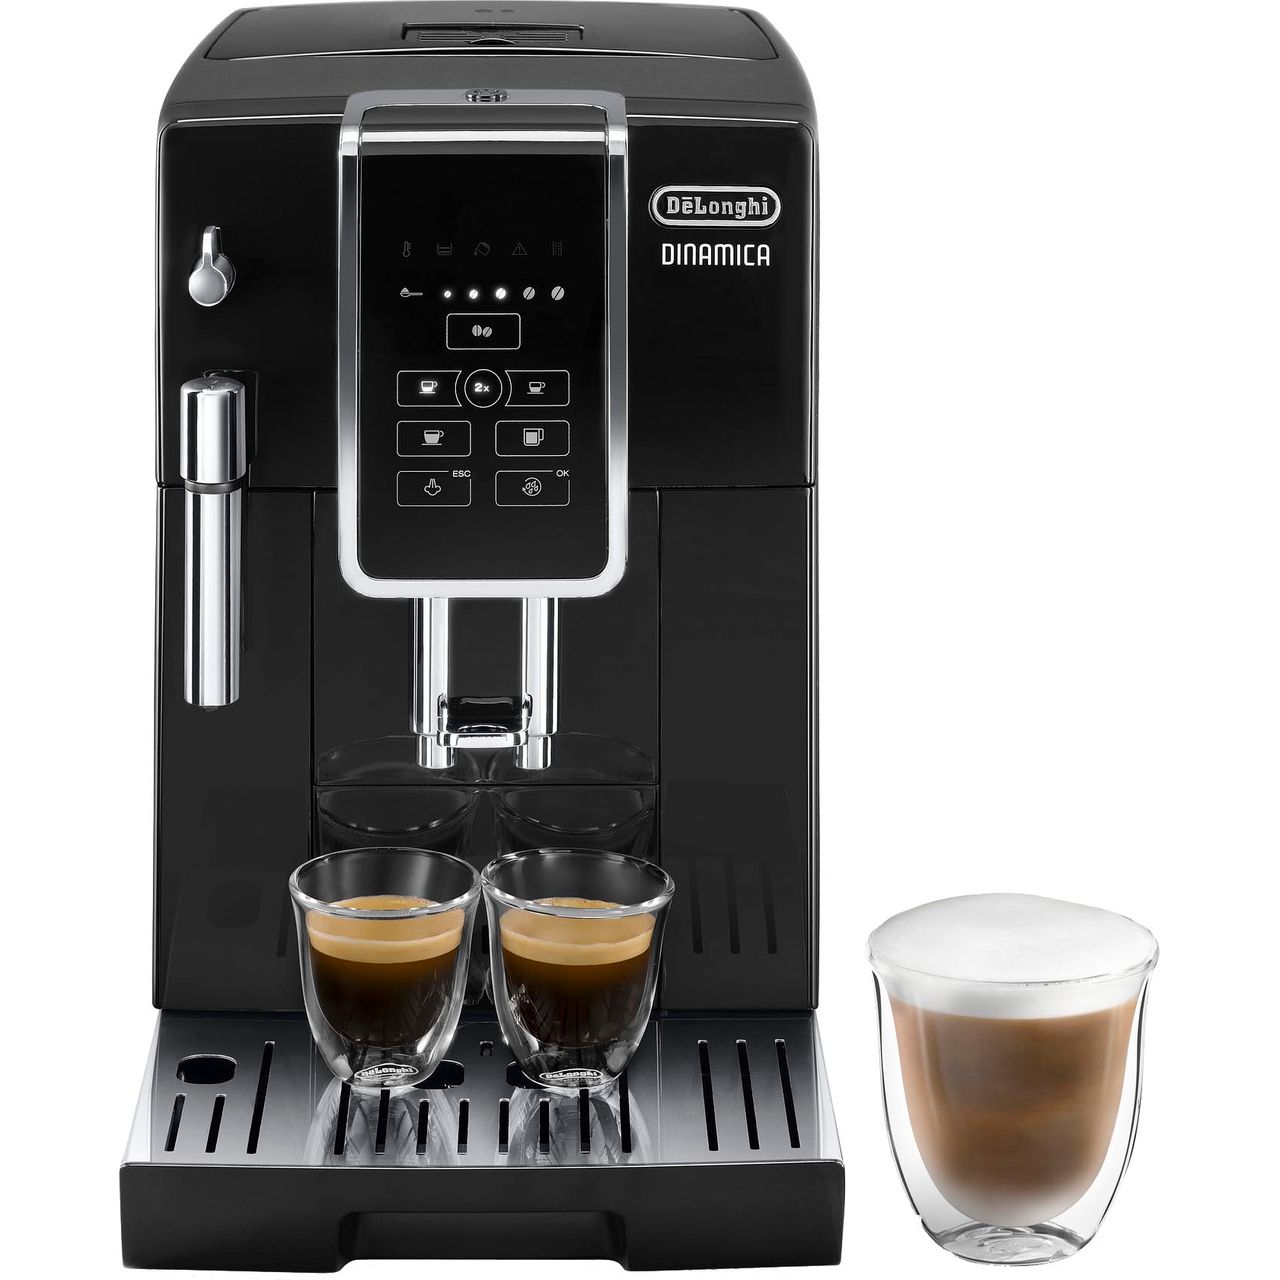 De'Longhi Dinamica ECAM350.15.B Bean to Cup Coffee Machine Review